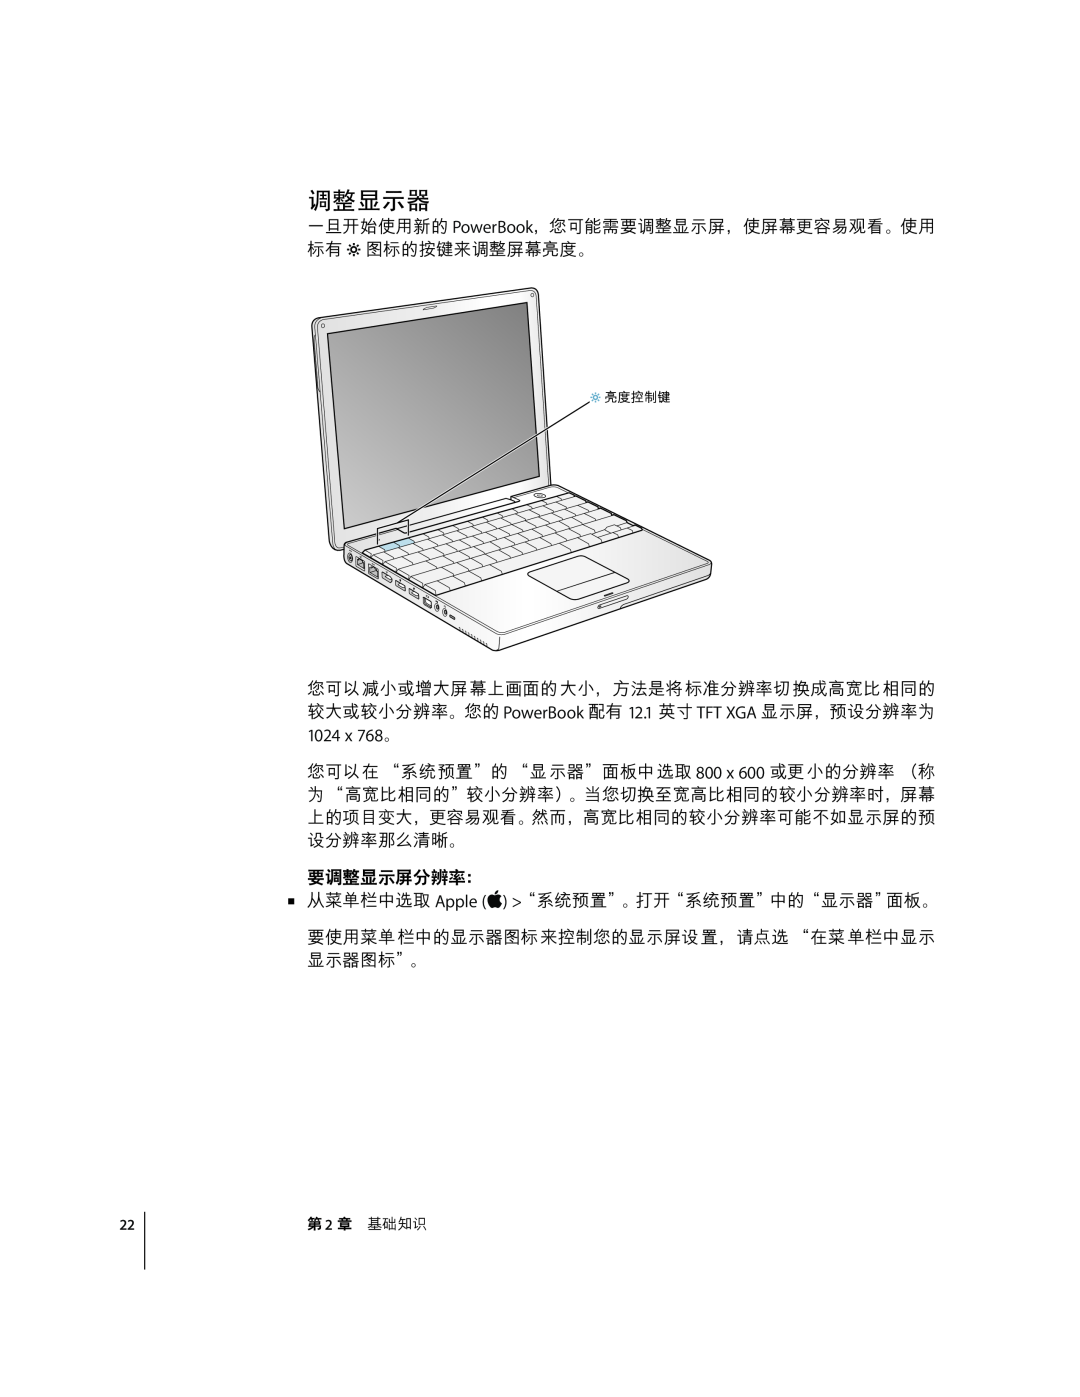 Apple G4 12 manual Hi*J, 4æZXçèé, 2 ½,ž 